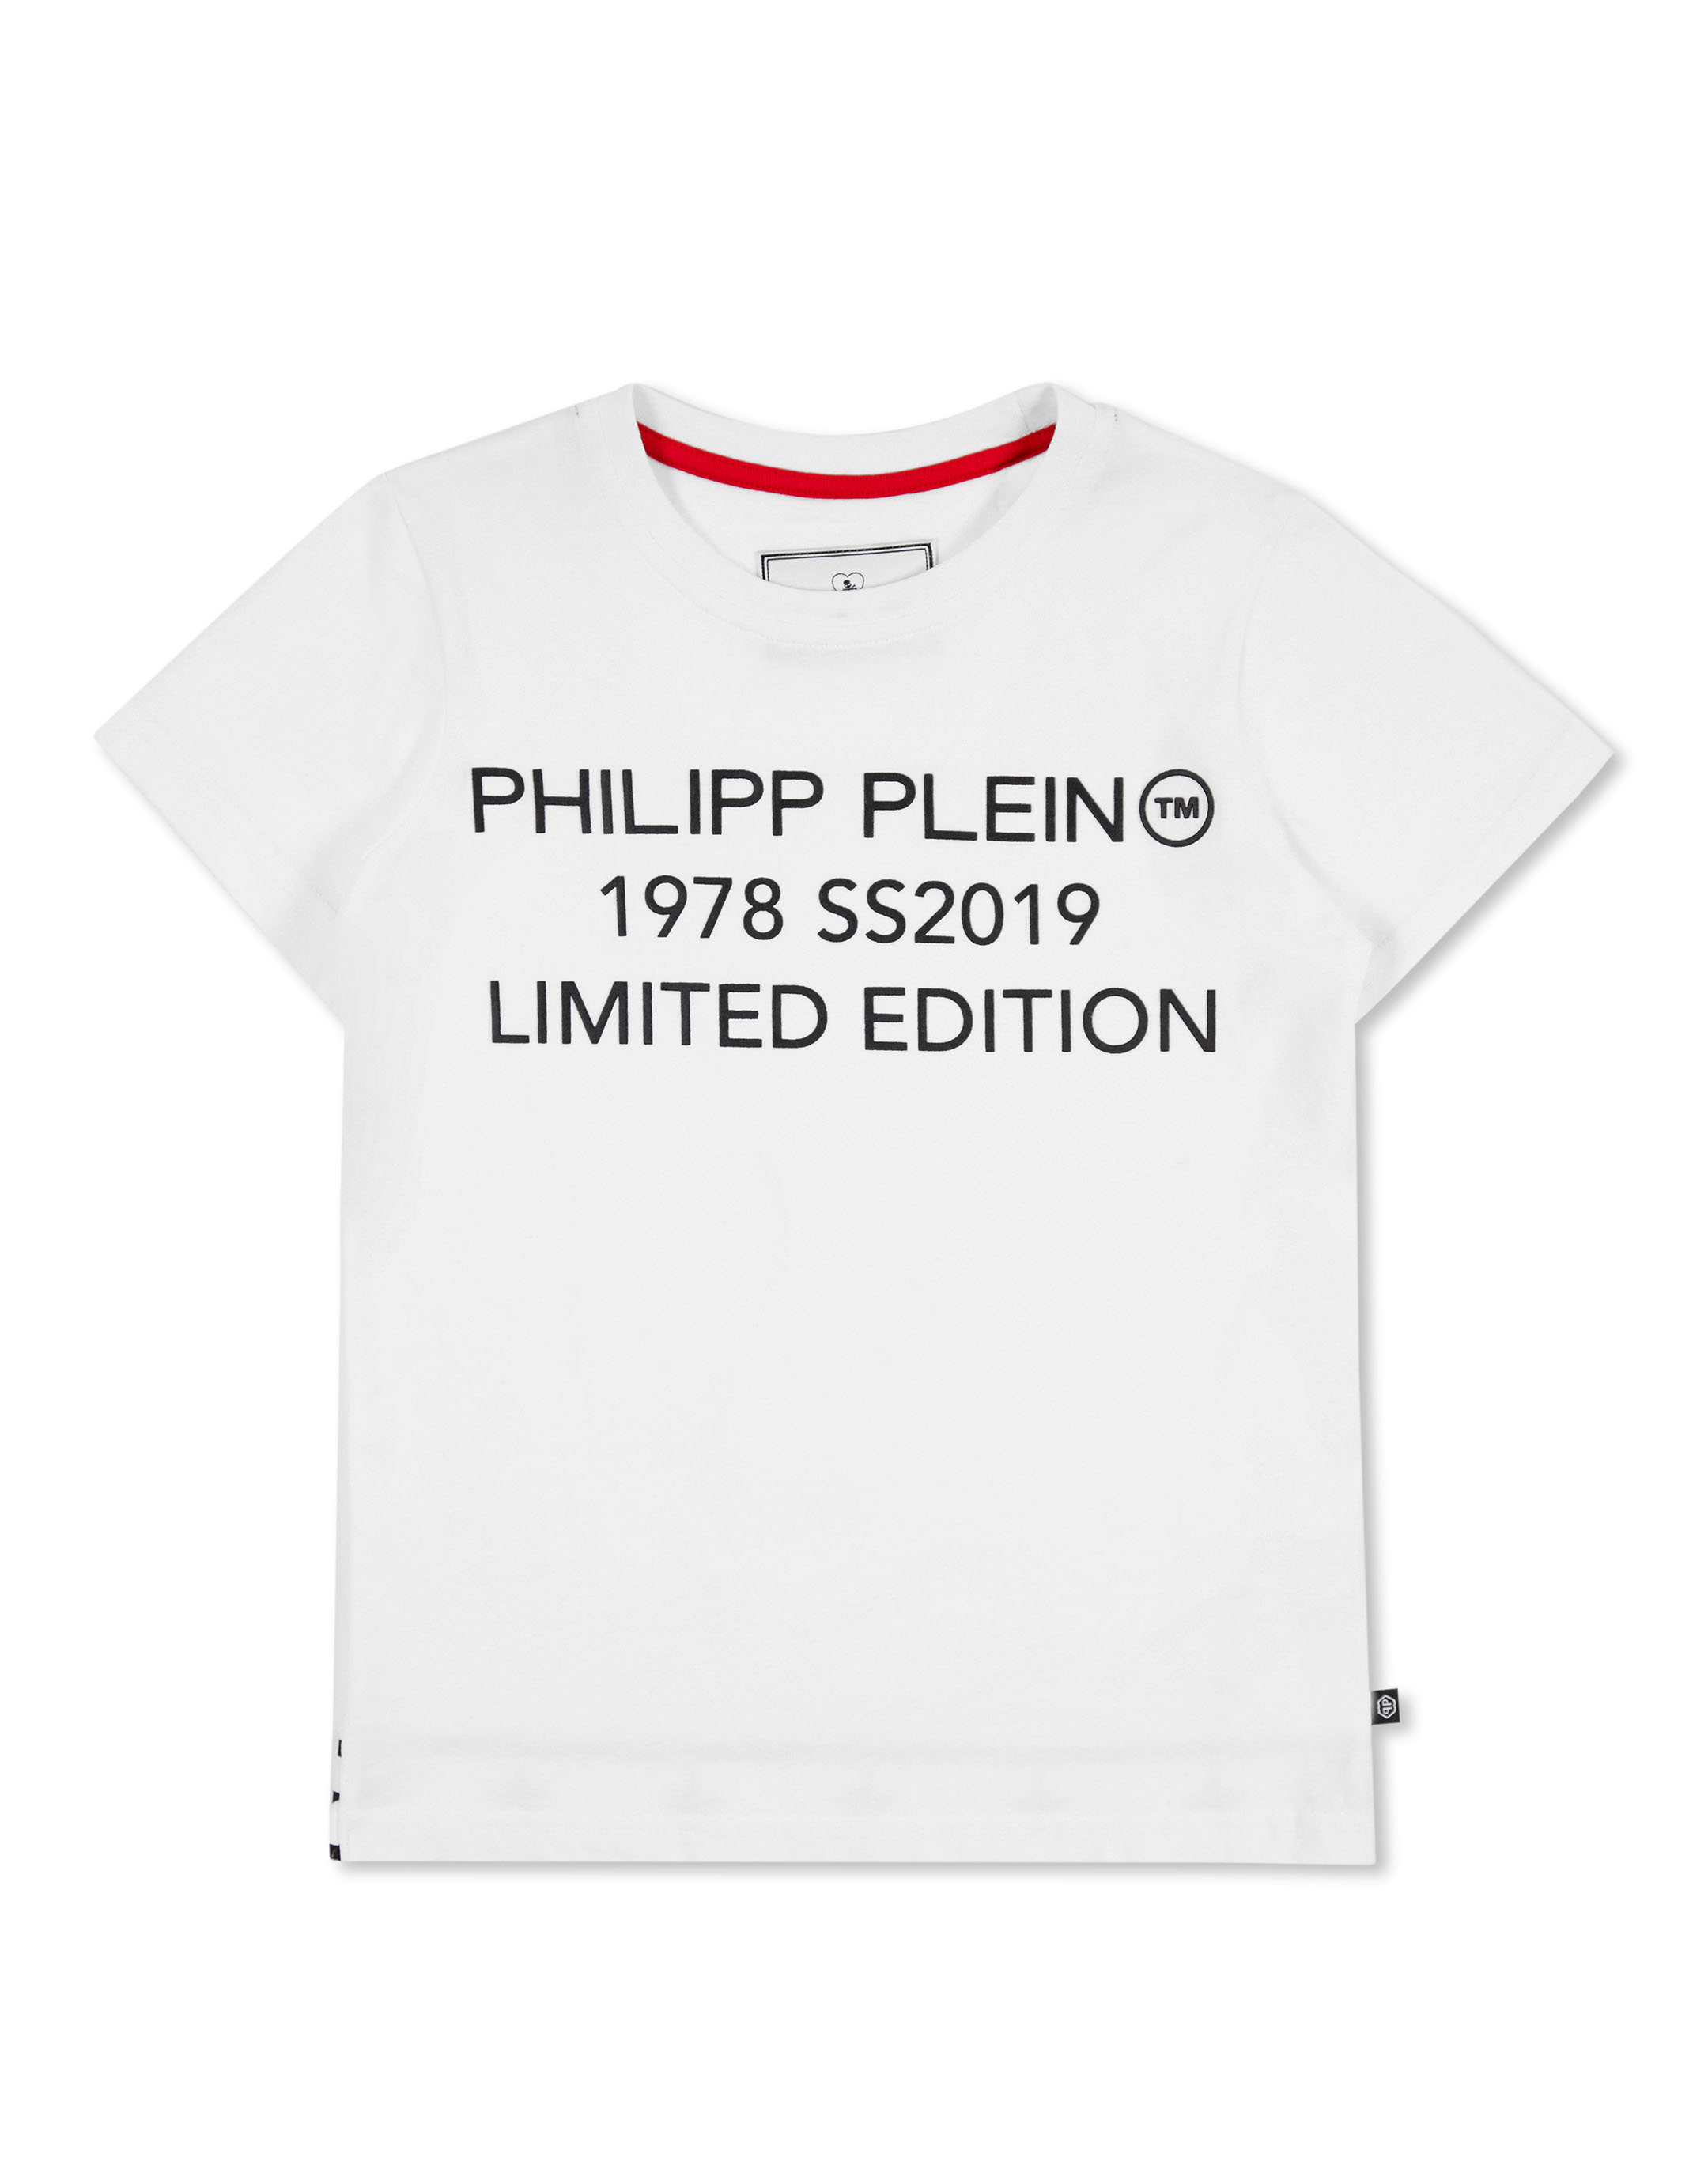 philipp plein 1978 limited edition